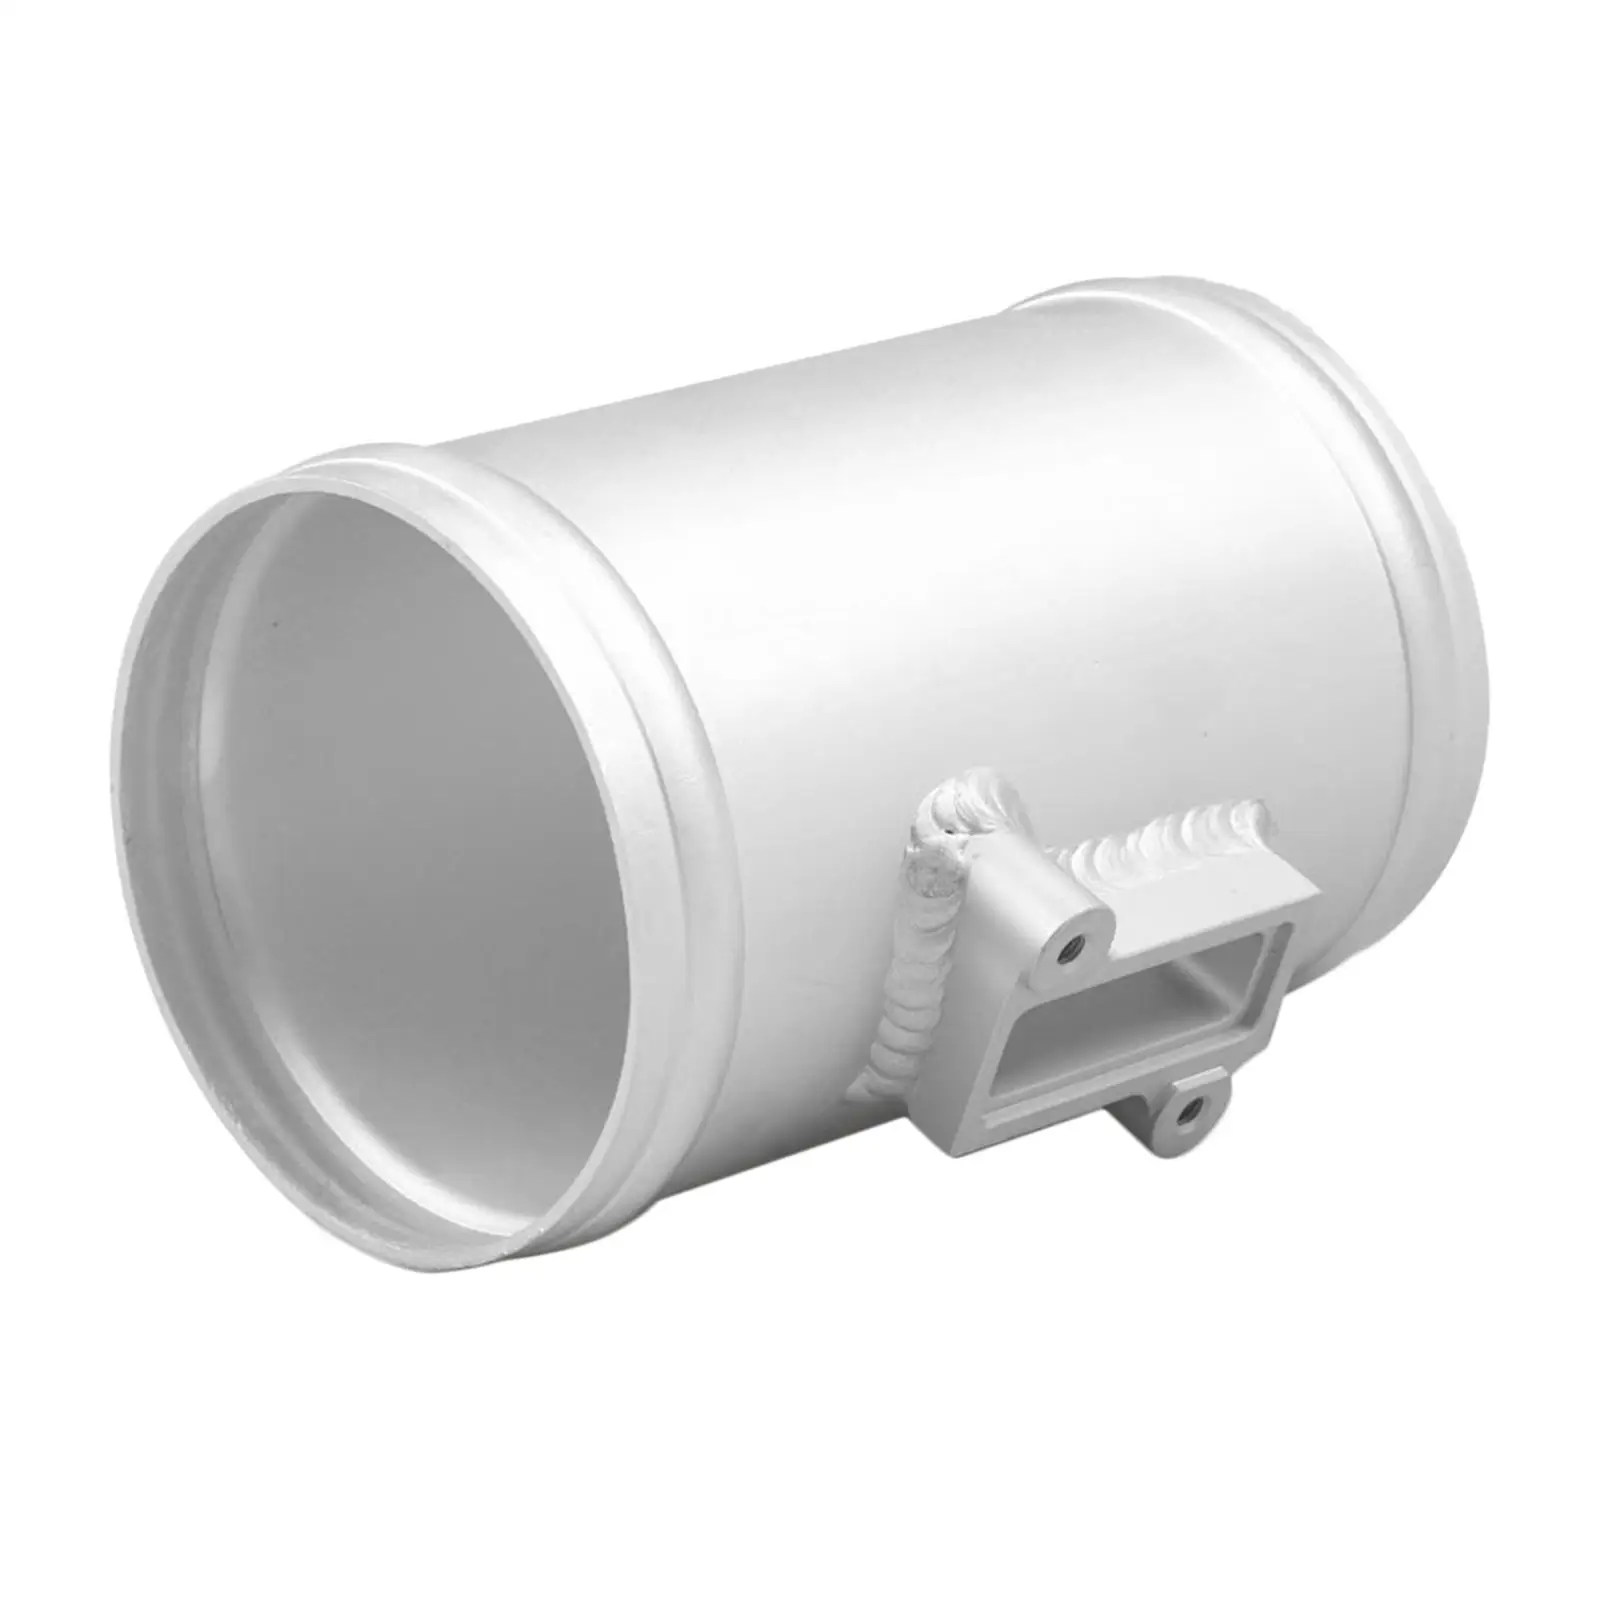 air Flow Sensor Adapter Durable Replaces Aluminum Alloy Air Flow Meter Mount